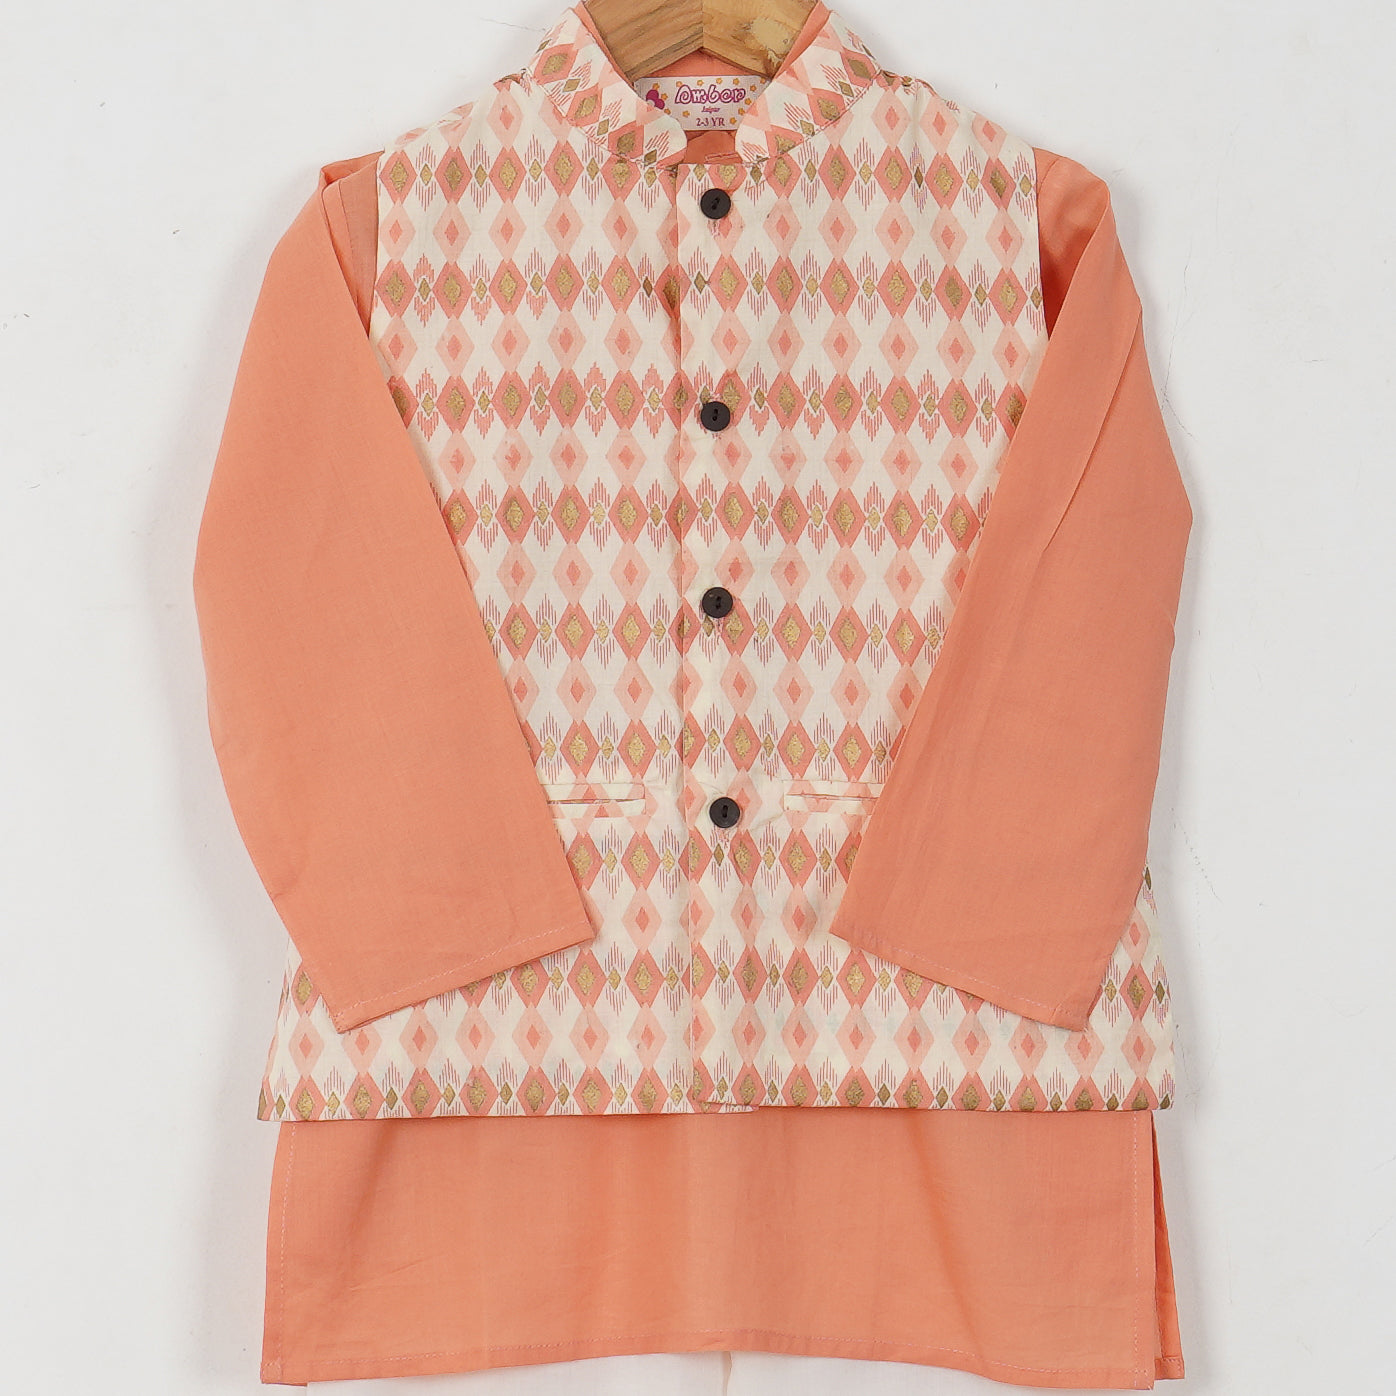 TANVEER - Boys Peach Kurta Pajama with Peach and Gold Print Ikat Vest